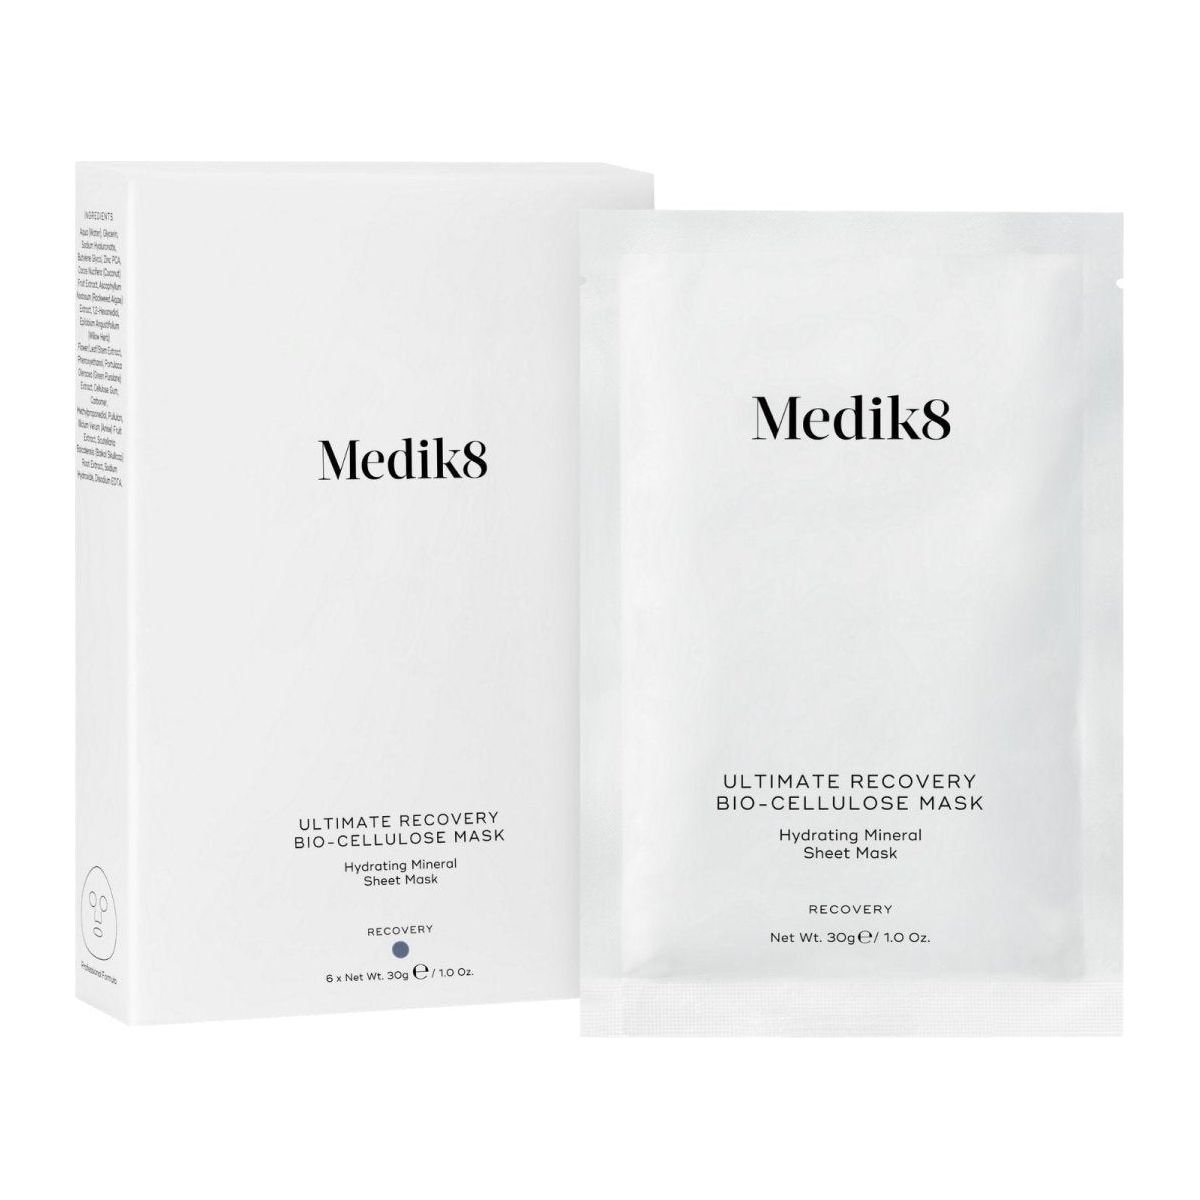 Medik8 | Ultimate Recovery Bio-Cellulose Mask - DG International Ventures Limited